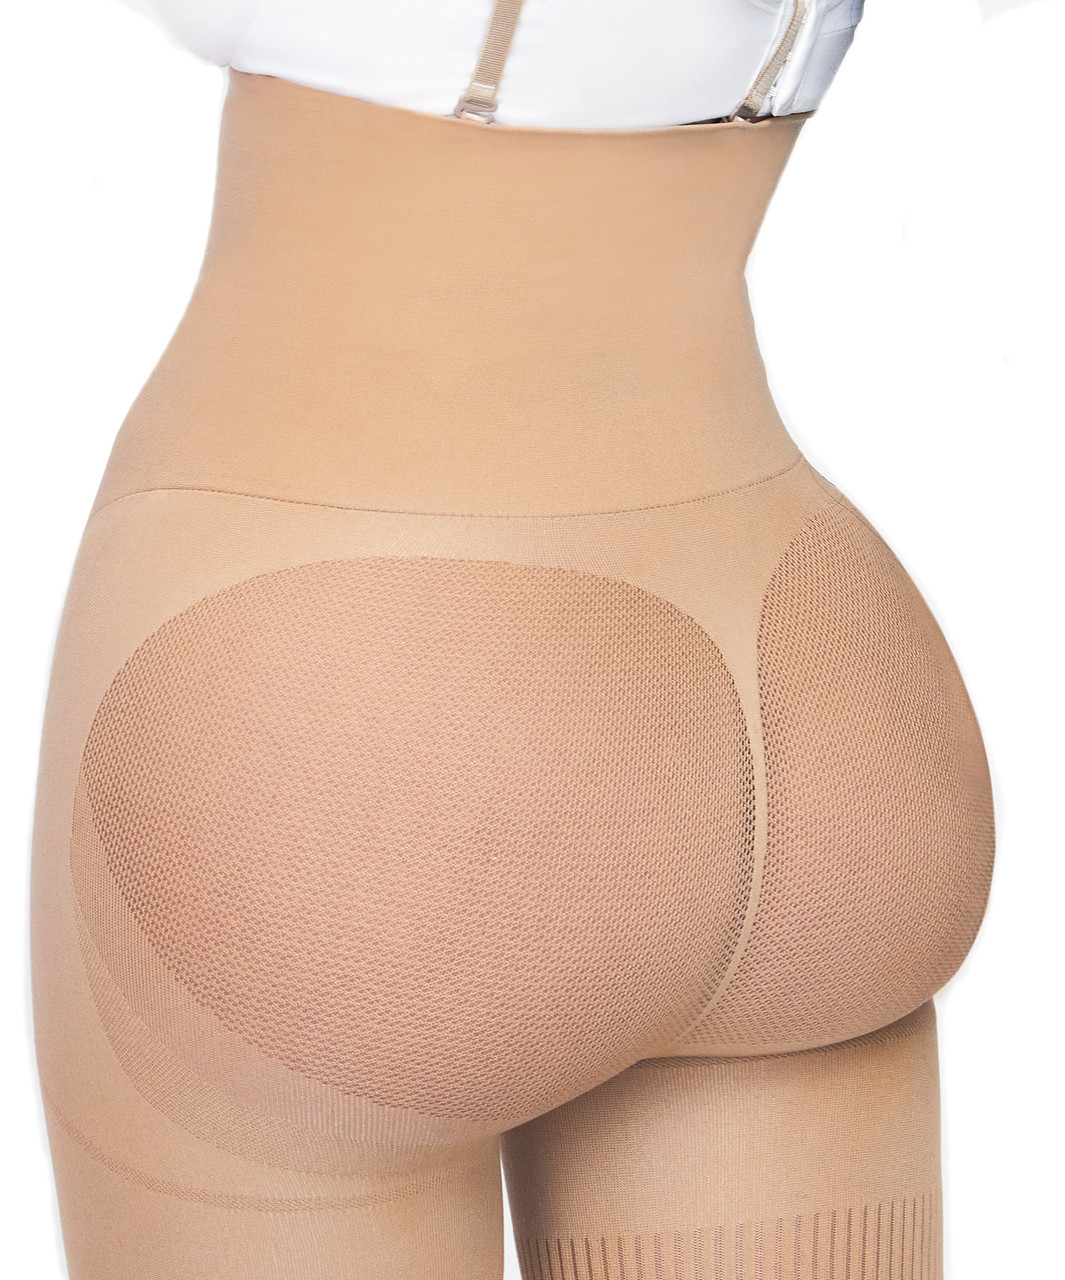 Hacipupu 2 Pack Shapewear Shorts for Women Tummy Control Butt